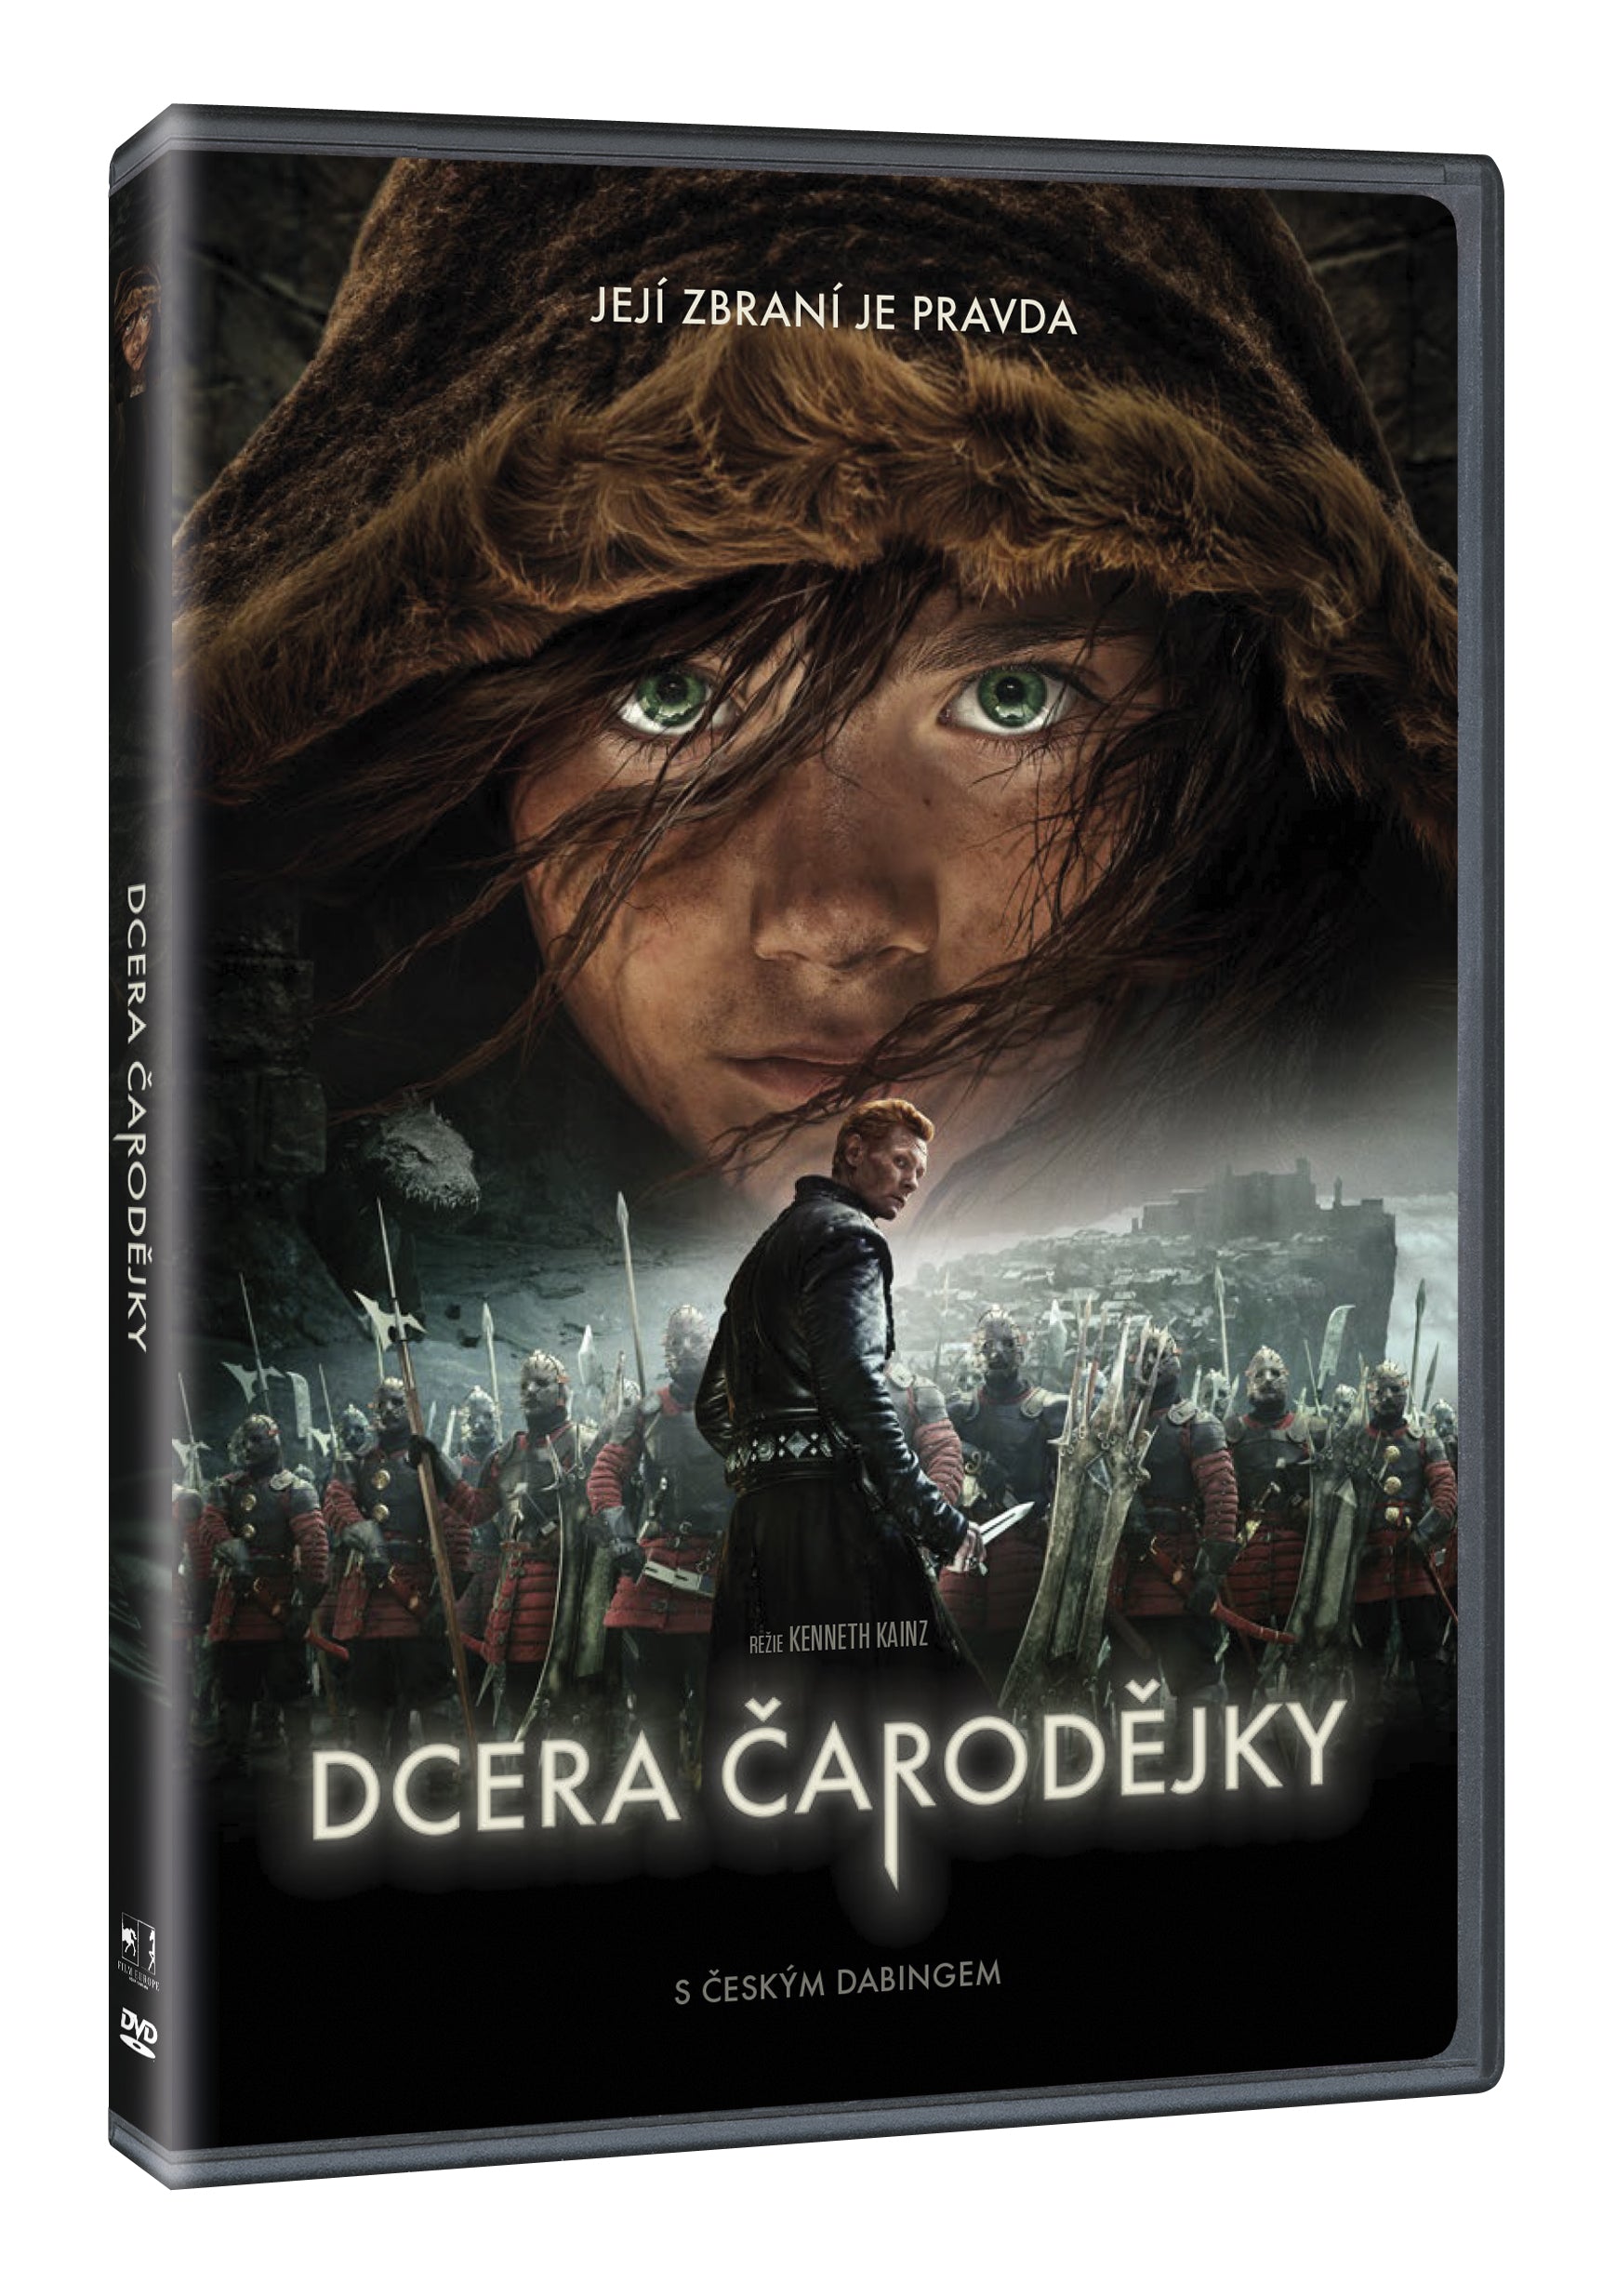 Dcera Carodejky DVD / Shamer's Daughter